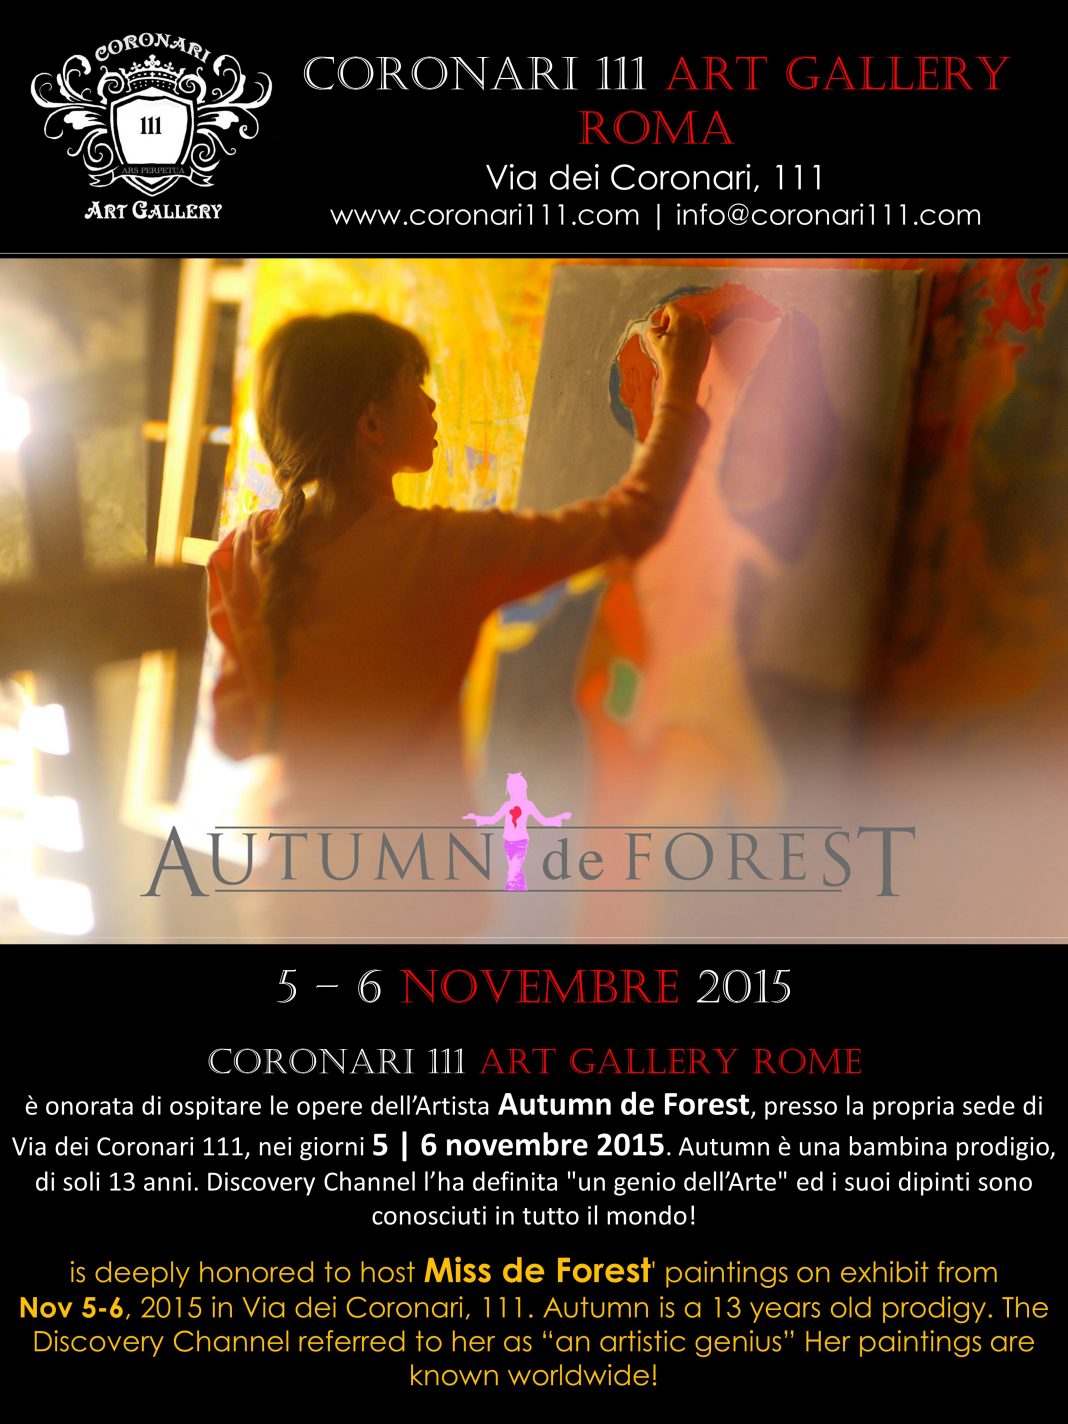 Autumn de Forest – An artistic geniushttps://www.exibart.com/repository/media/eventi/2015/11/autumn-de-forest-8211-an-artistic-genius-1068x1424.jpg